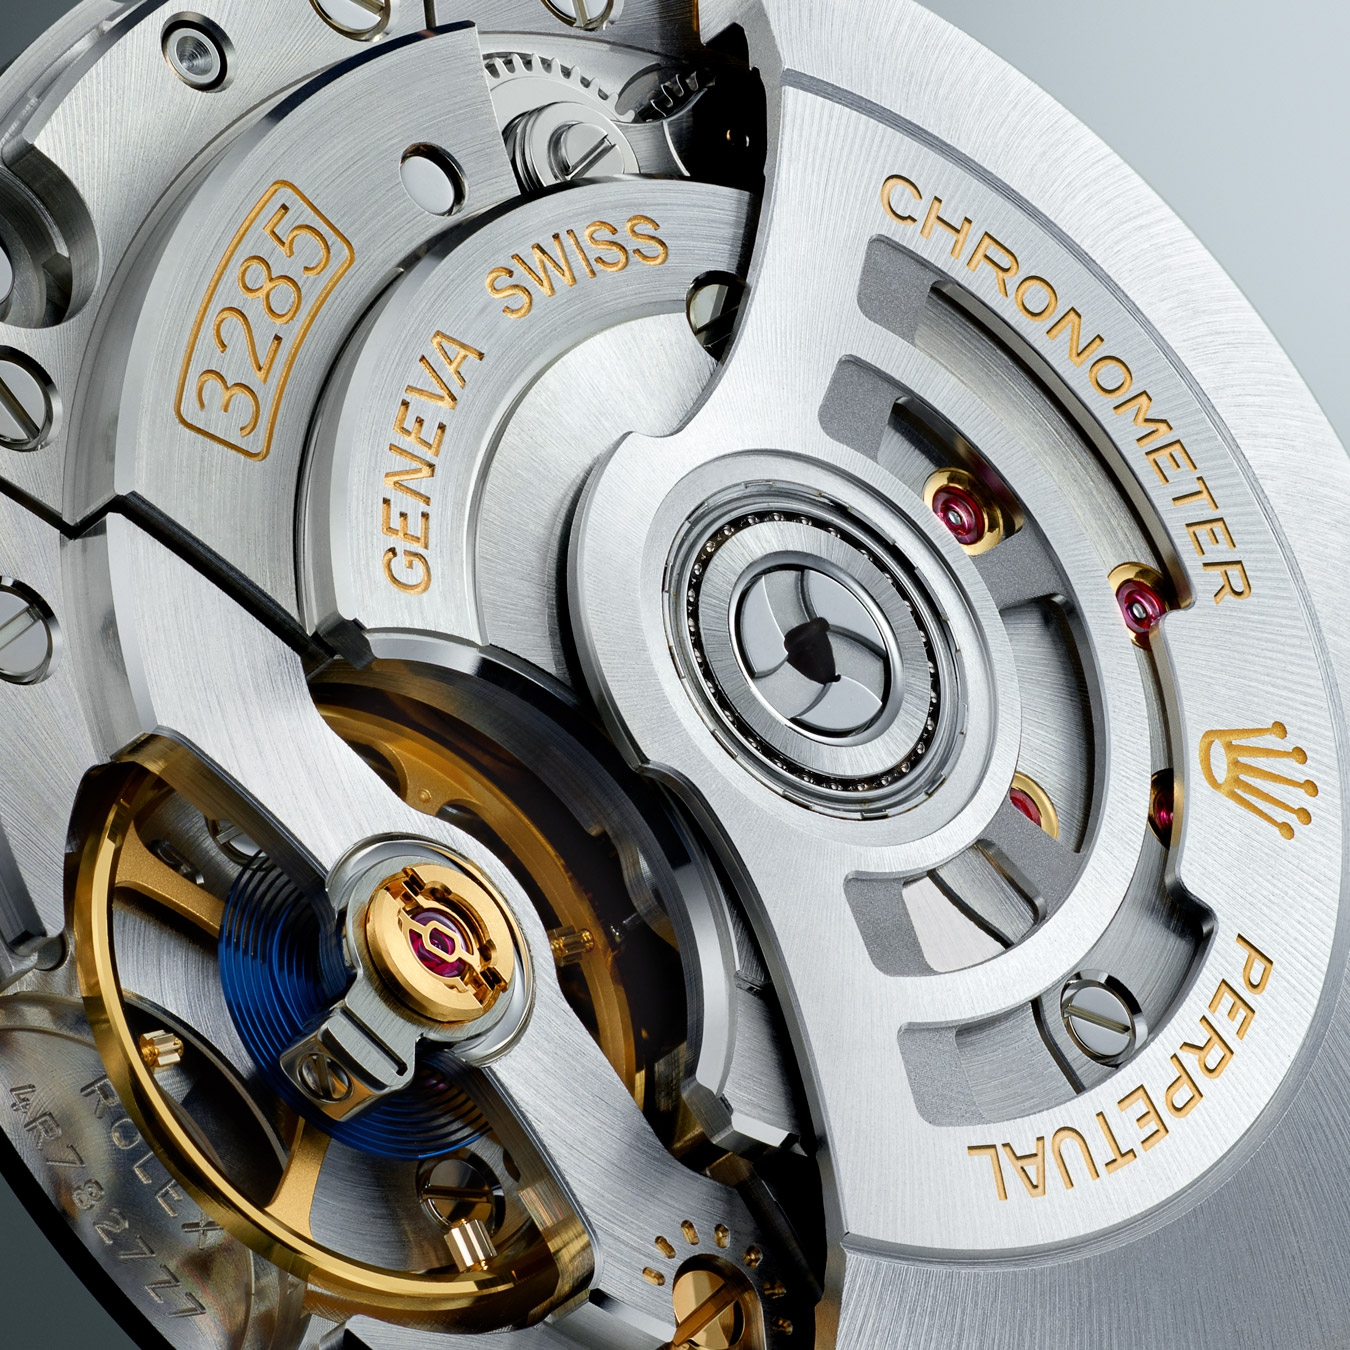 Rolex's watch mechanism